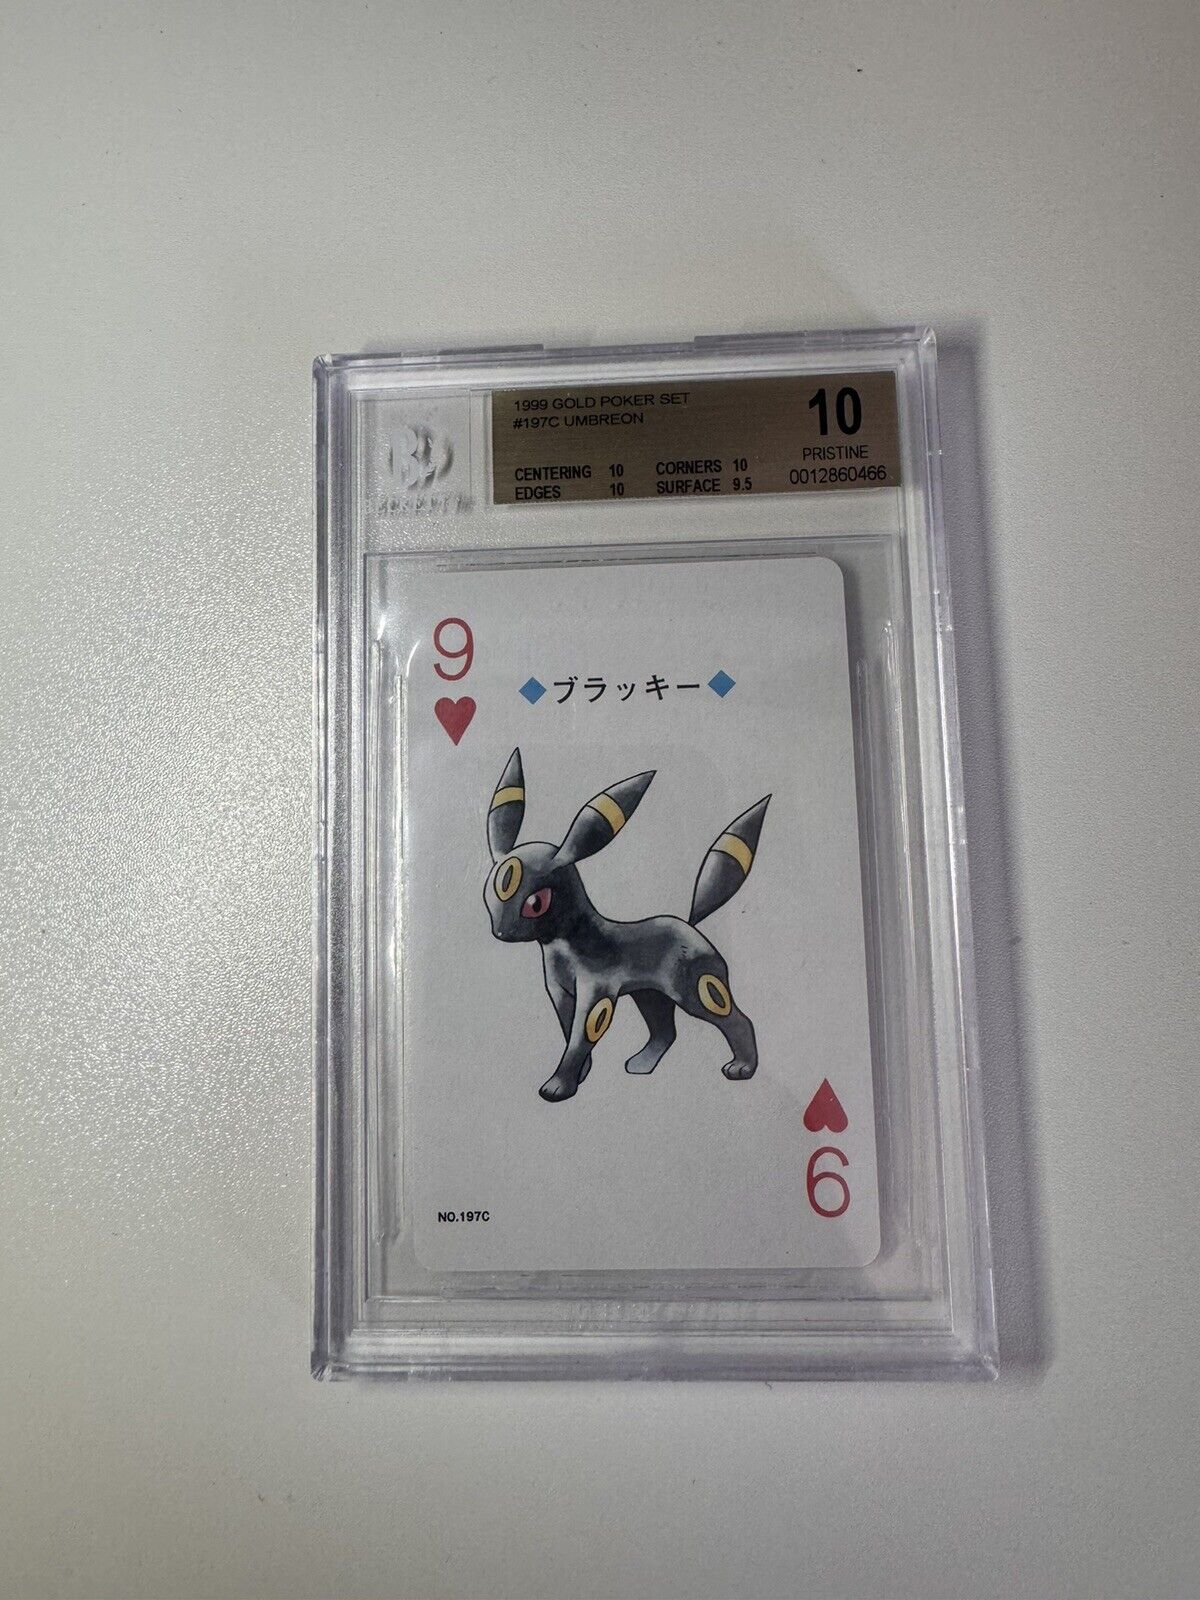 1999/2000 Pokemon Playing Card Poker Gold/Ho-oh Back Umbreon #197C Beckett 10